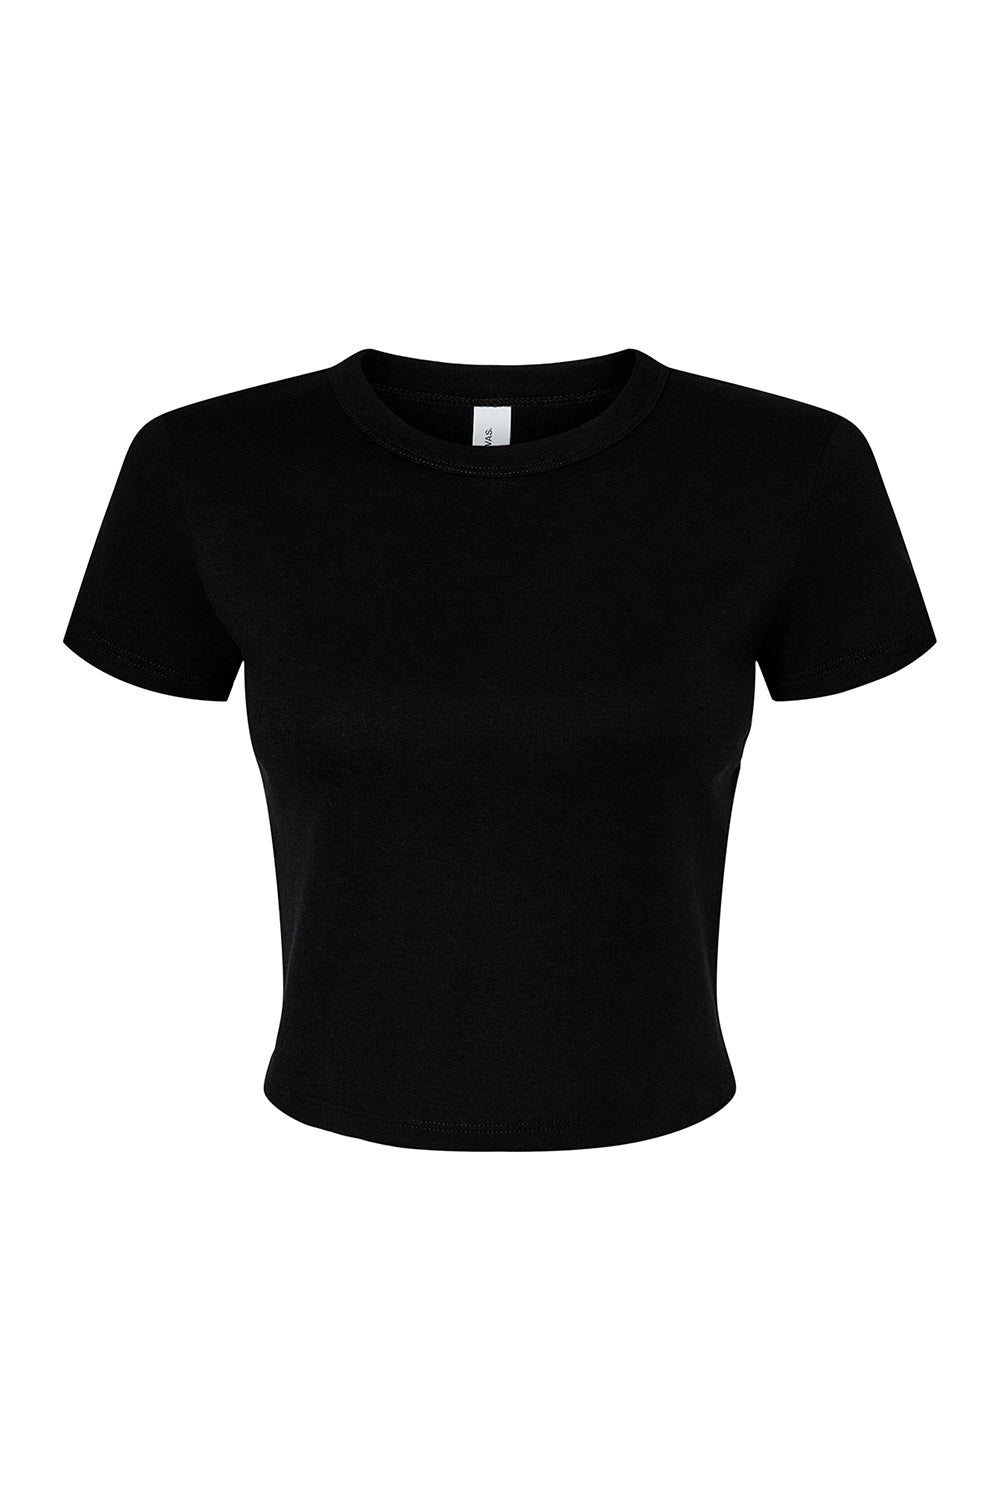 Bella + Canvas 1010BE Womens Micro Ribbed Short Sleeve Crewneck Baby T-Shirt Black Flat Front